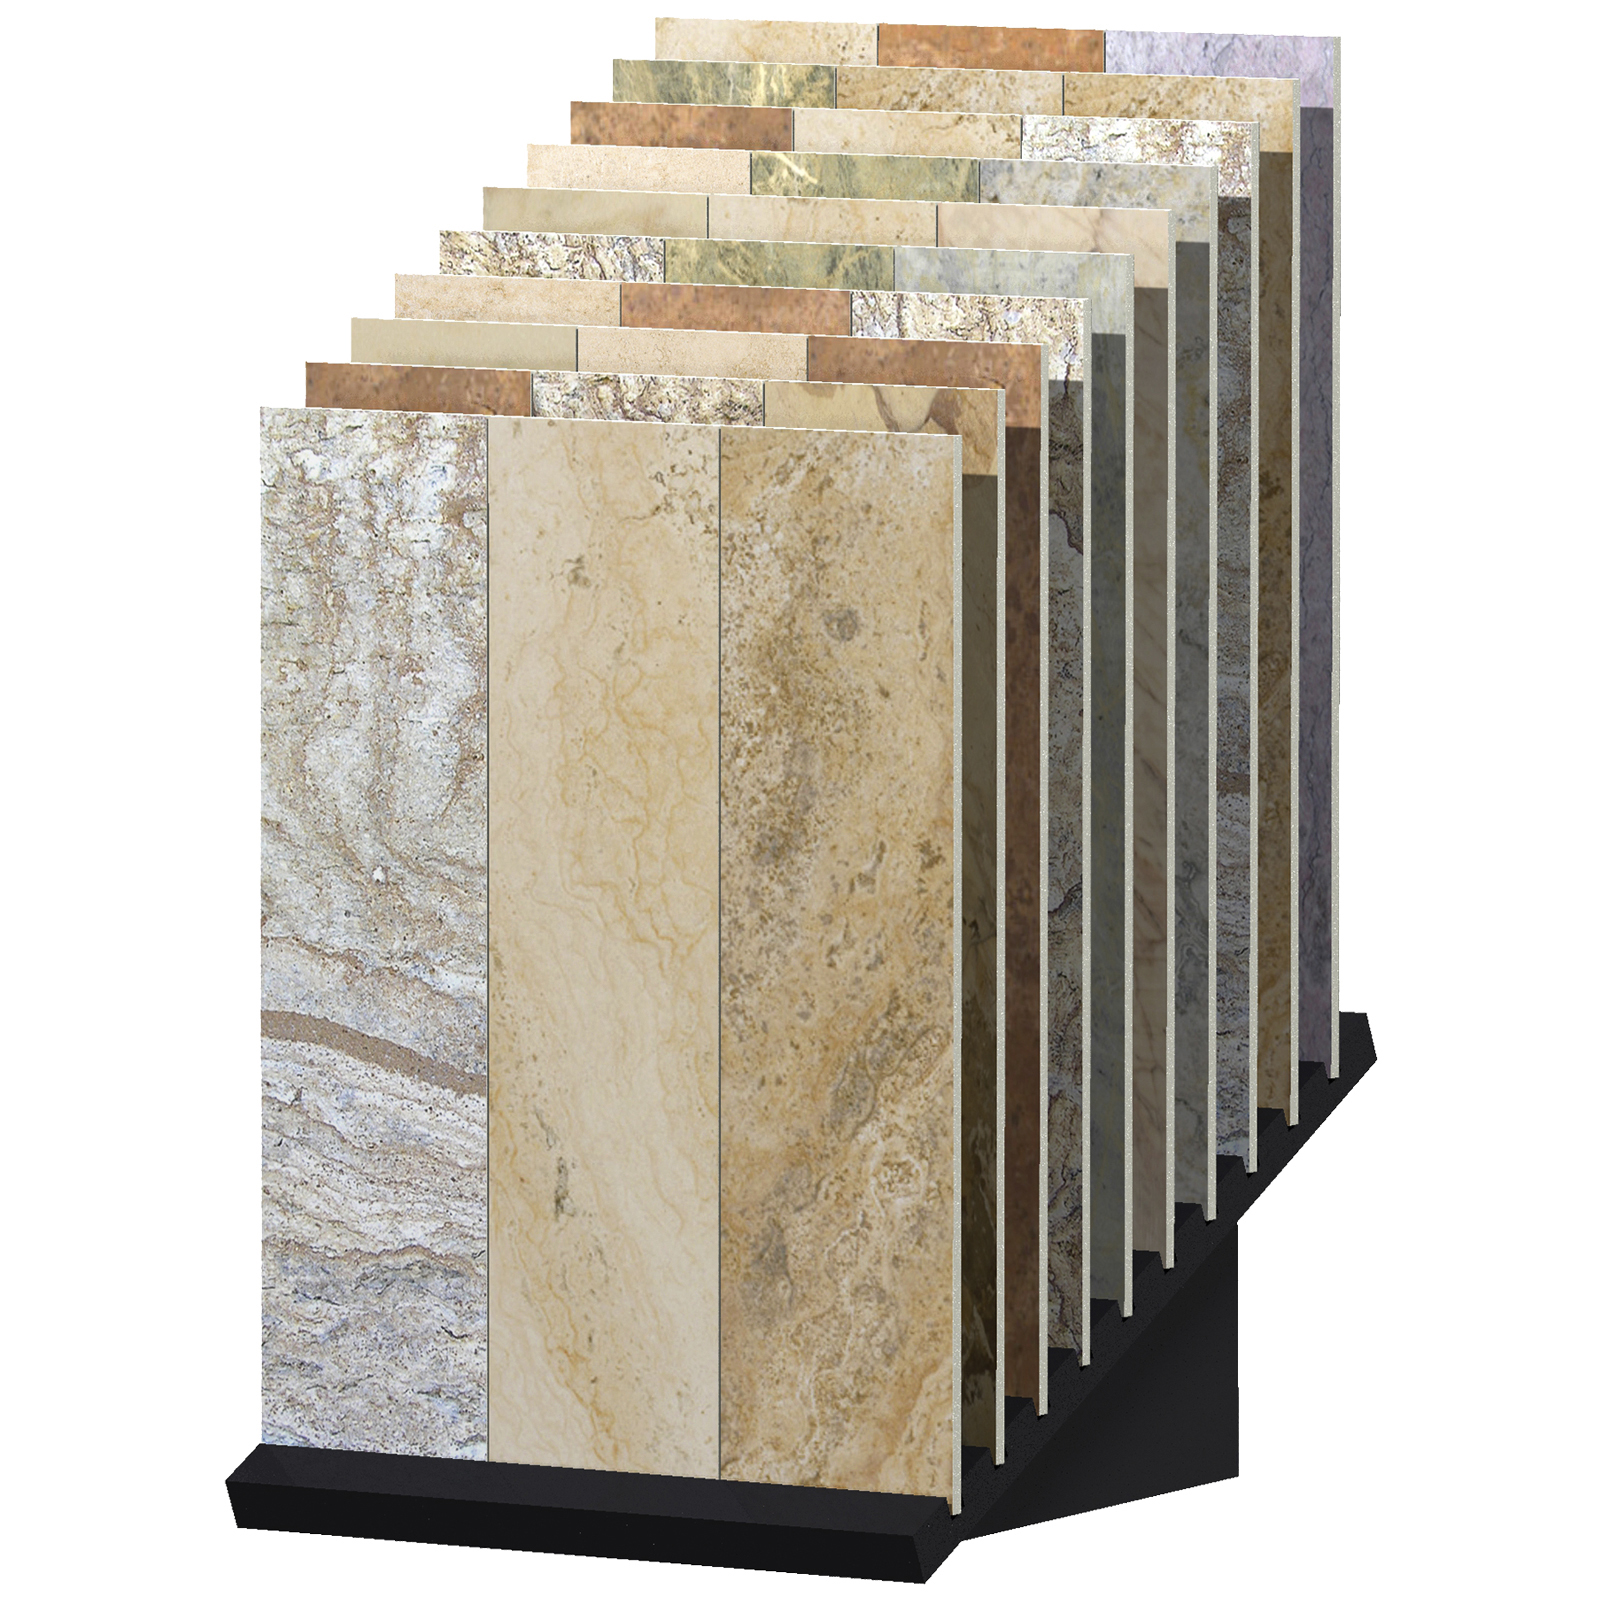 WB01 Flooring Showroom Wedge Stock Display Countertop Floor Ceramic Tile Quartz Stone Hardwood Plank Sample Displays